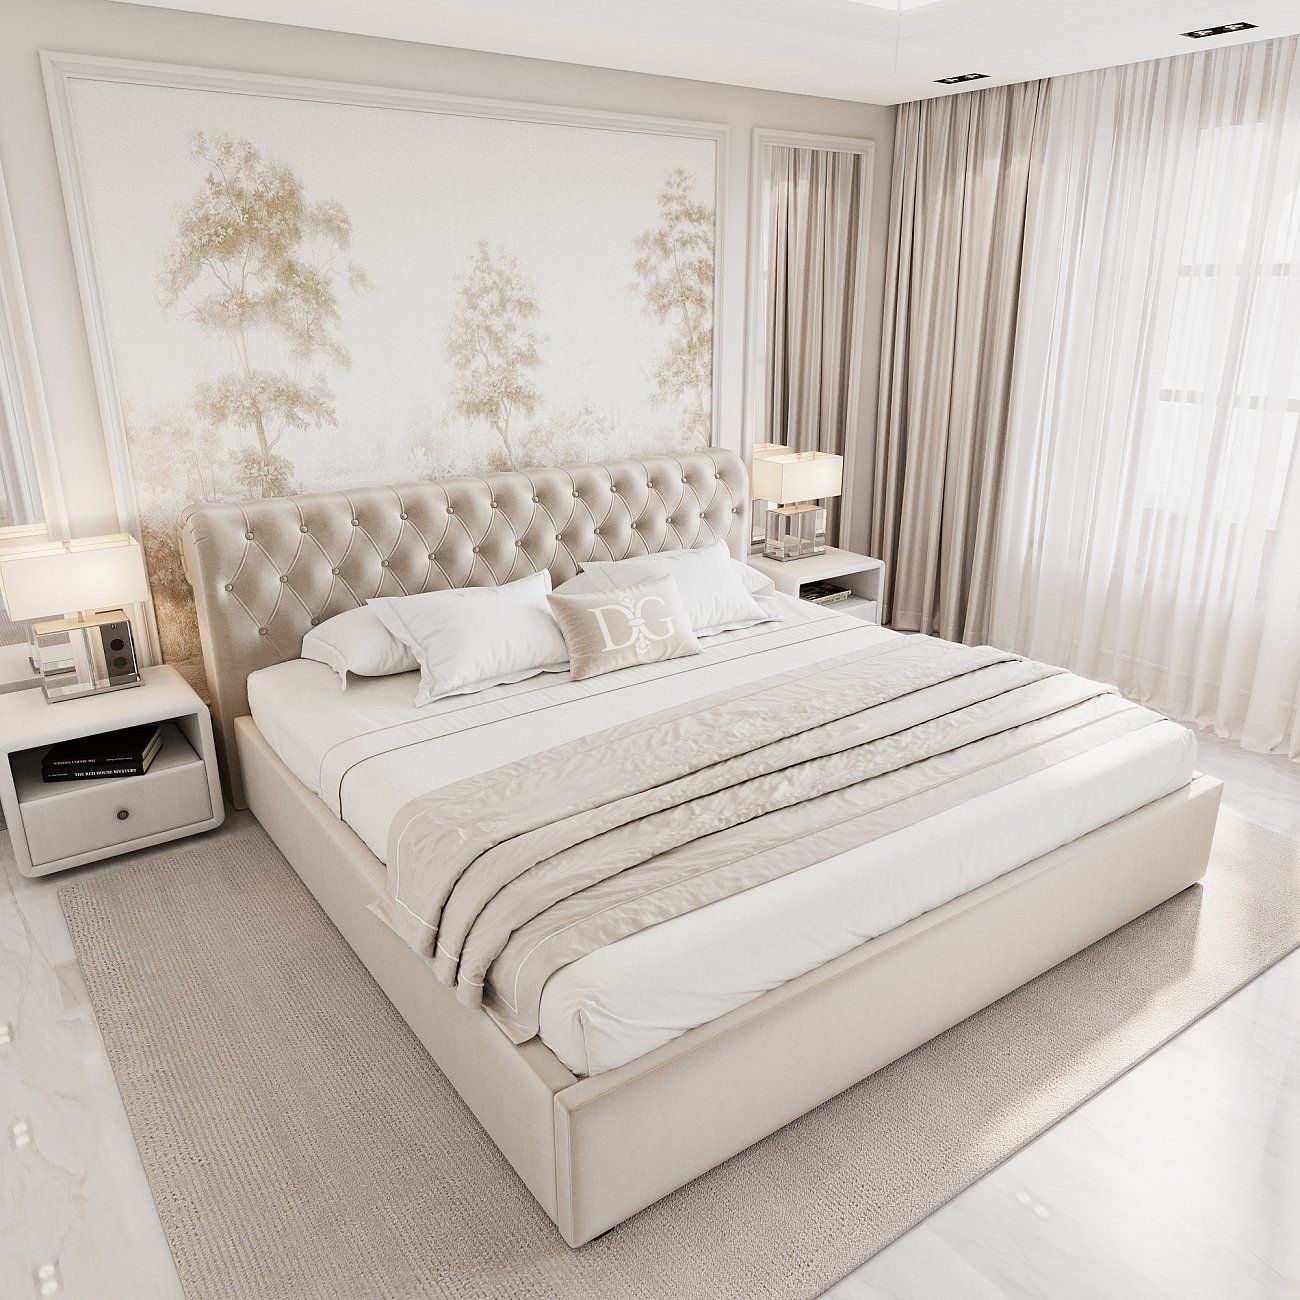 Teenage bed with a soft backrest 140x200 light beige Sweet Dreams